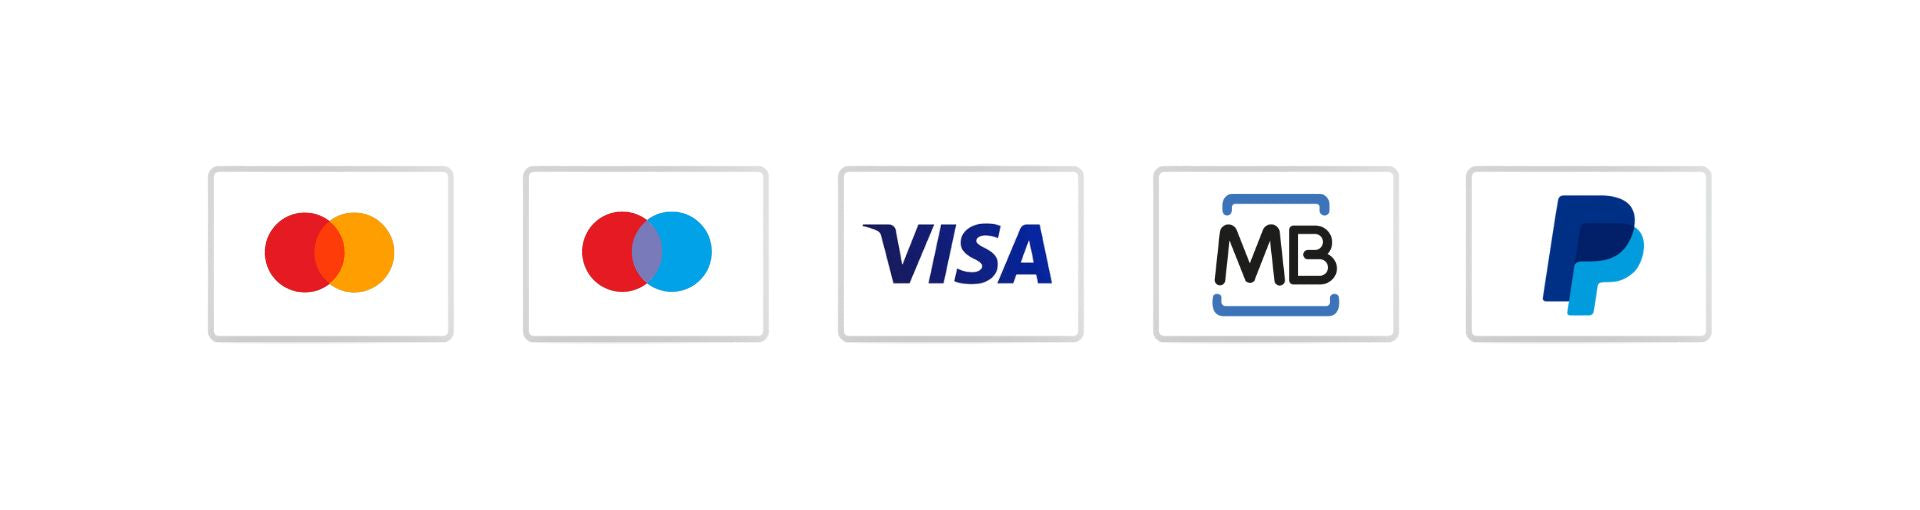 Visa, Maestro, Mastercard, Paypal